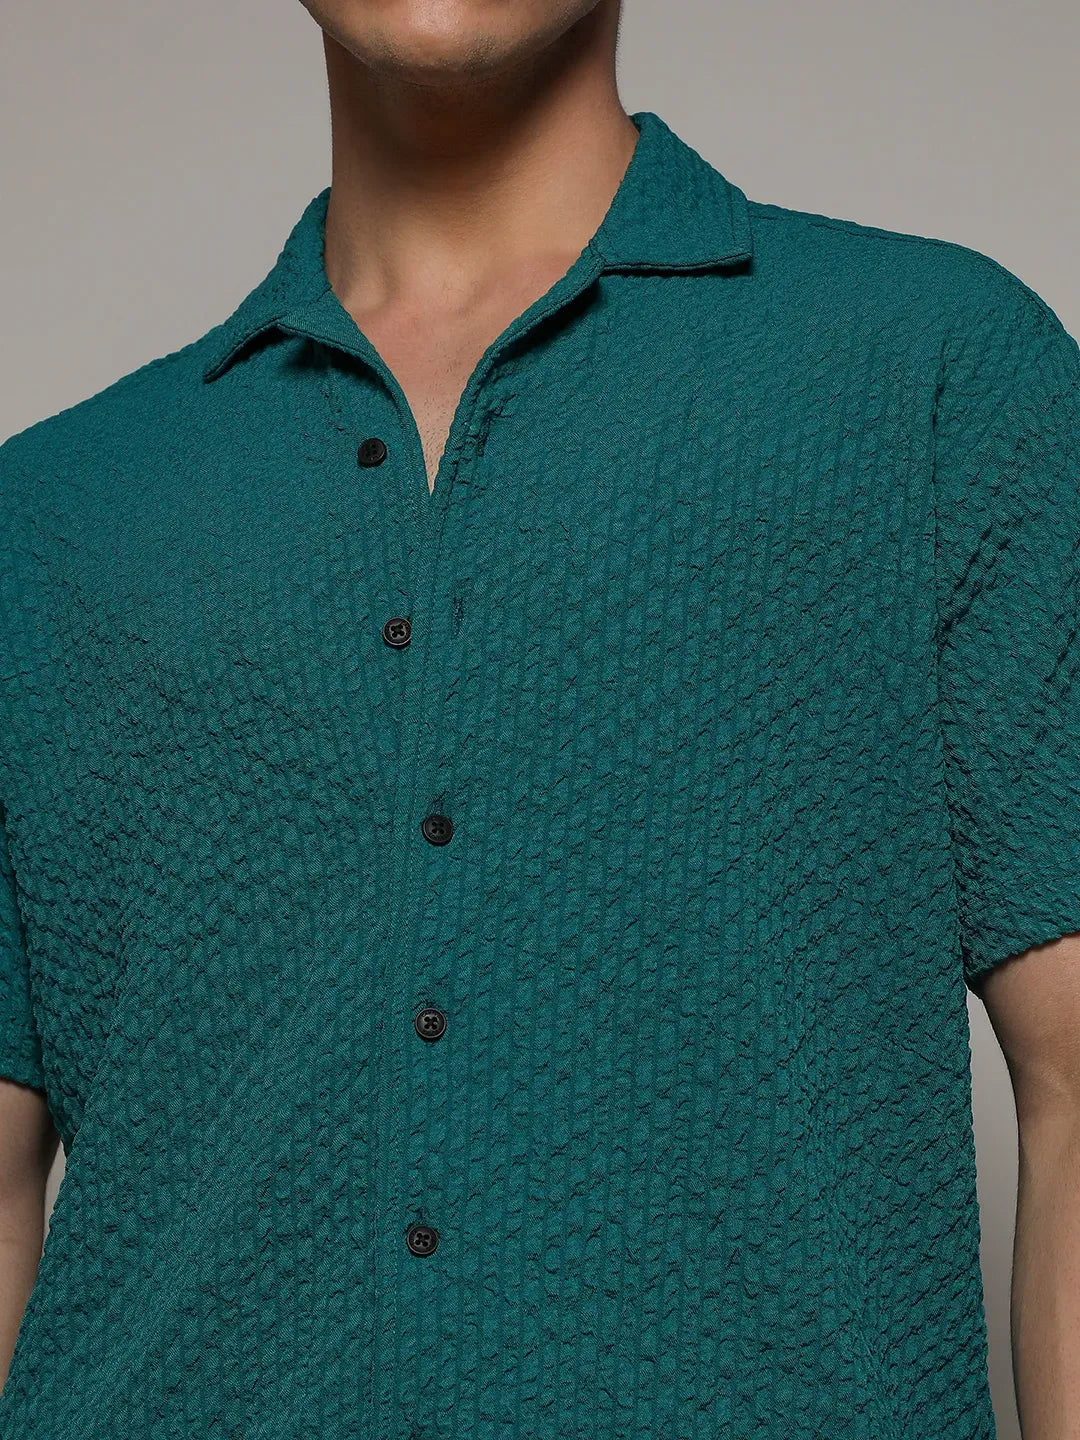 Men's Teal Green Self-Design Creased Striped Shirt